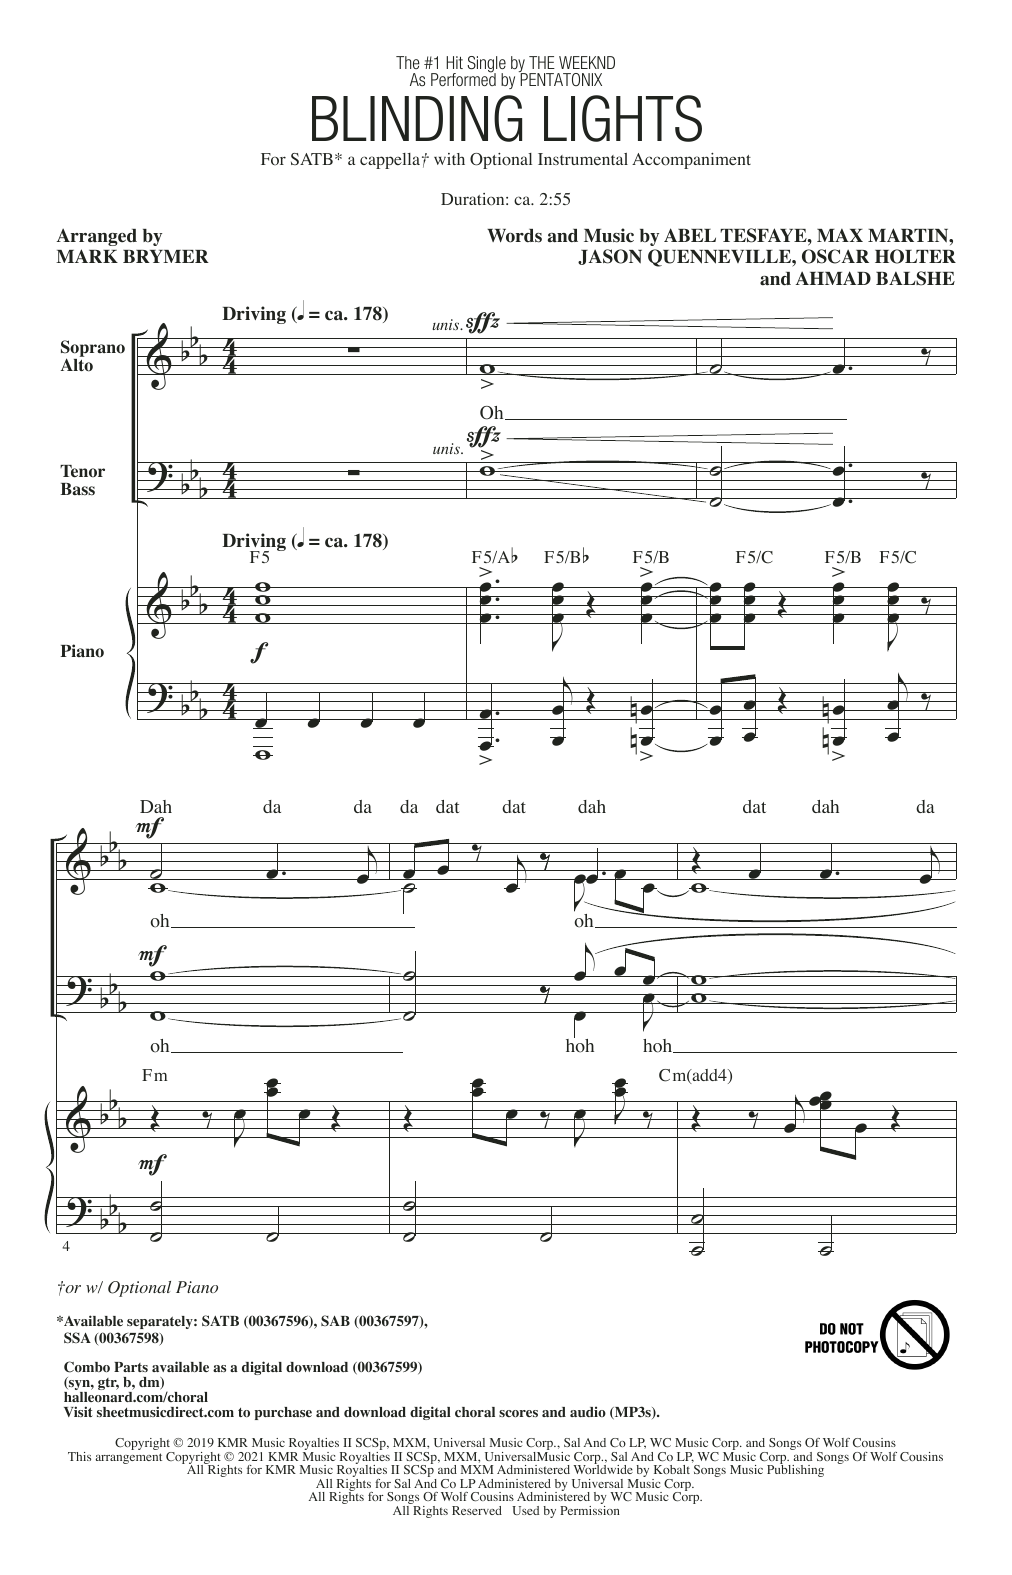 Pentatonix Blinding Lights (arr. Mark Brymer) Sheet Music Notes & Chords for SAB Choir - Download or Print PDF